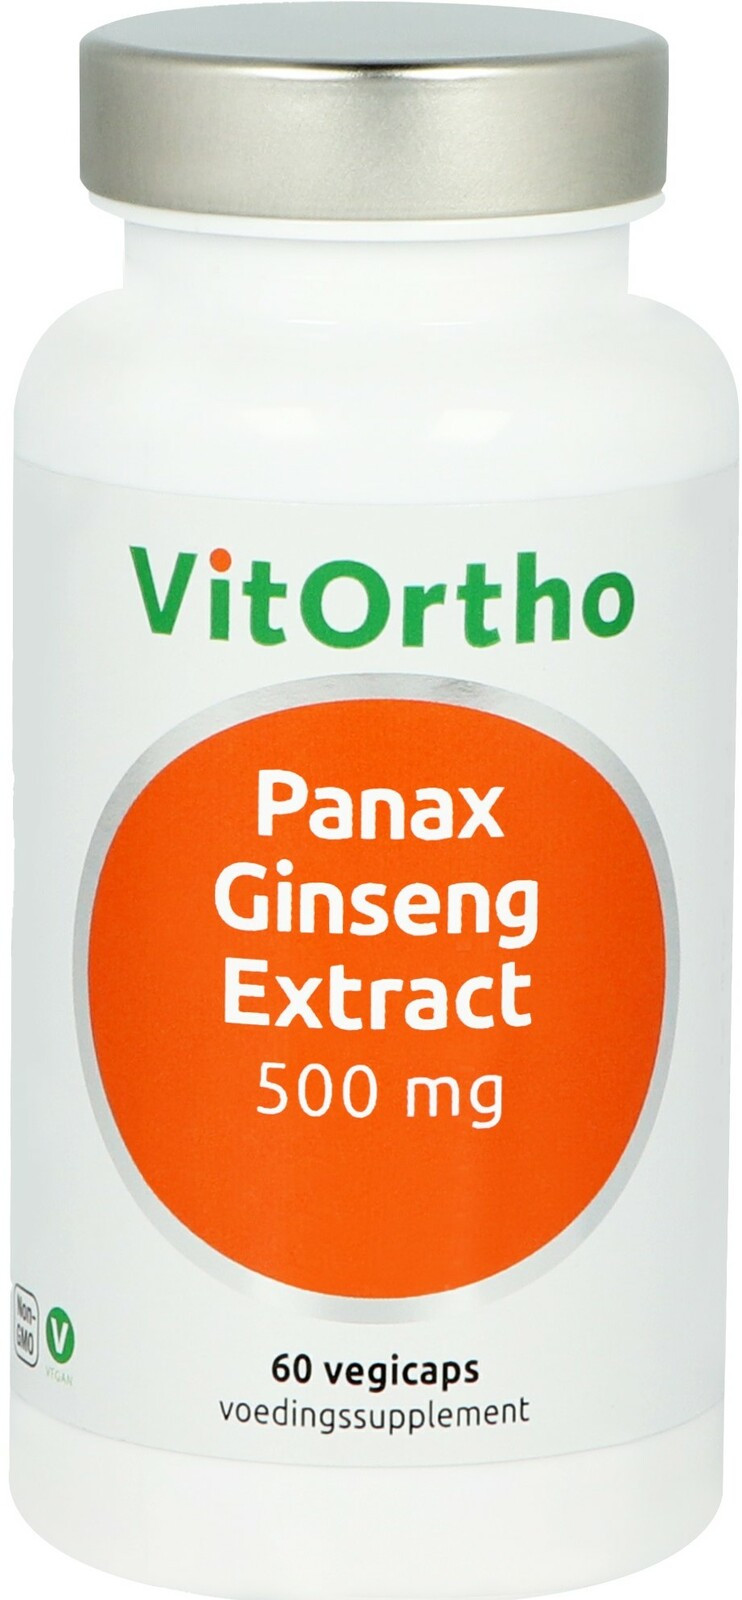 Vitortho Panax Ginseng Extract Vegicaps